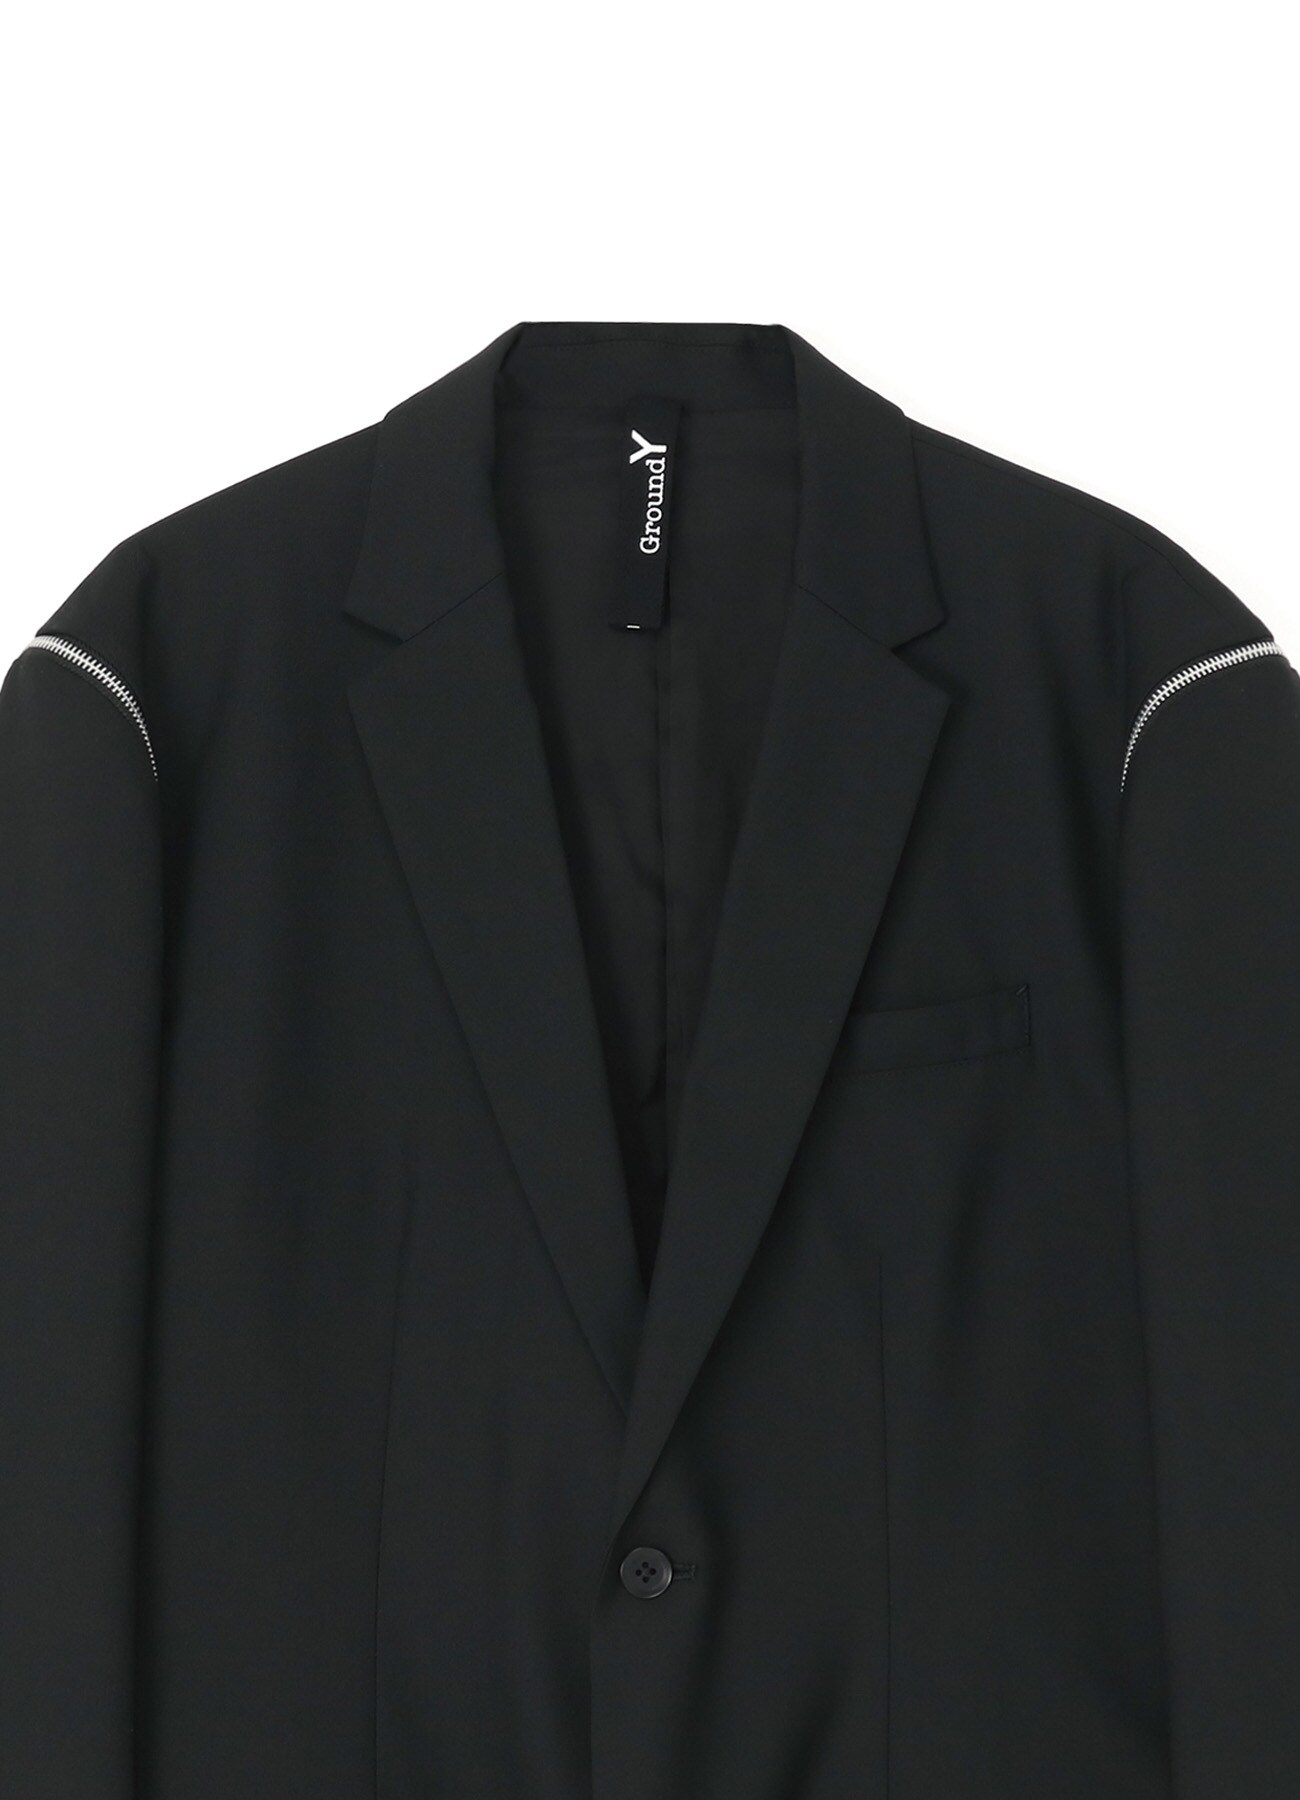 Wool/Polyester Gabardine Jacket with Shoulder Zippers